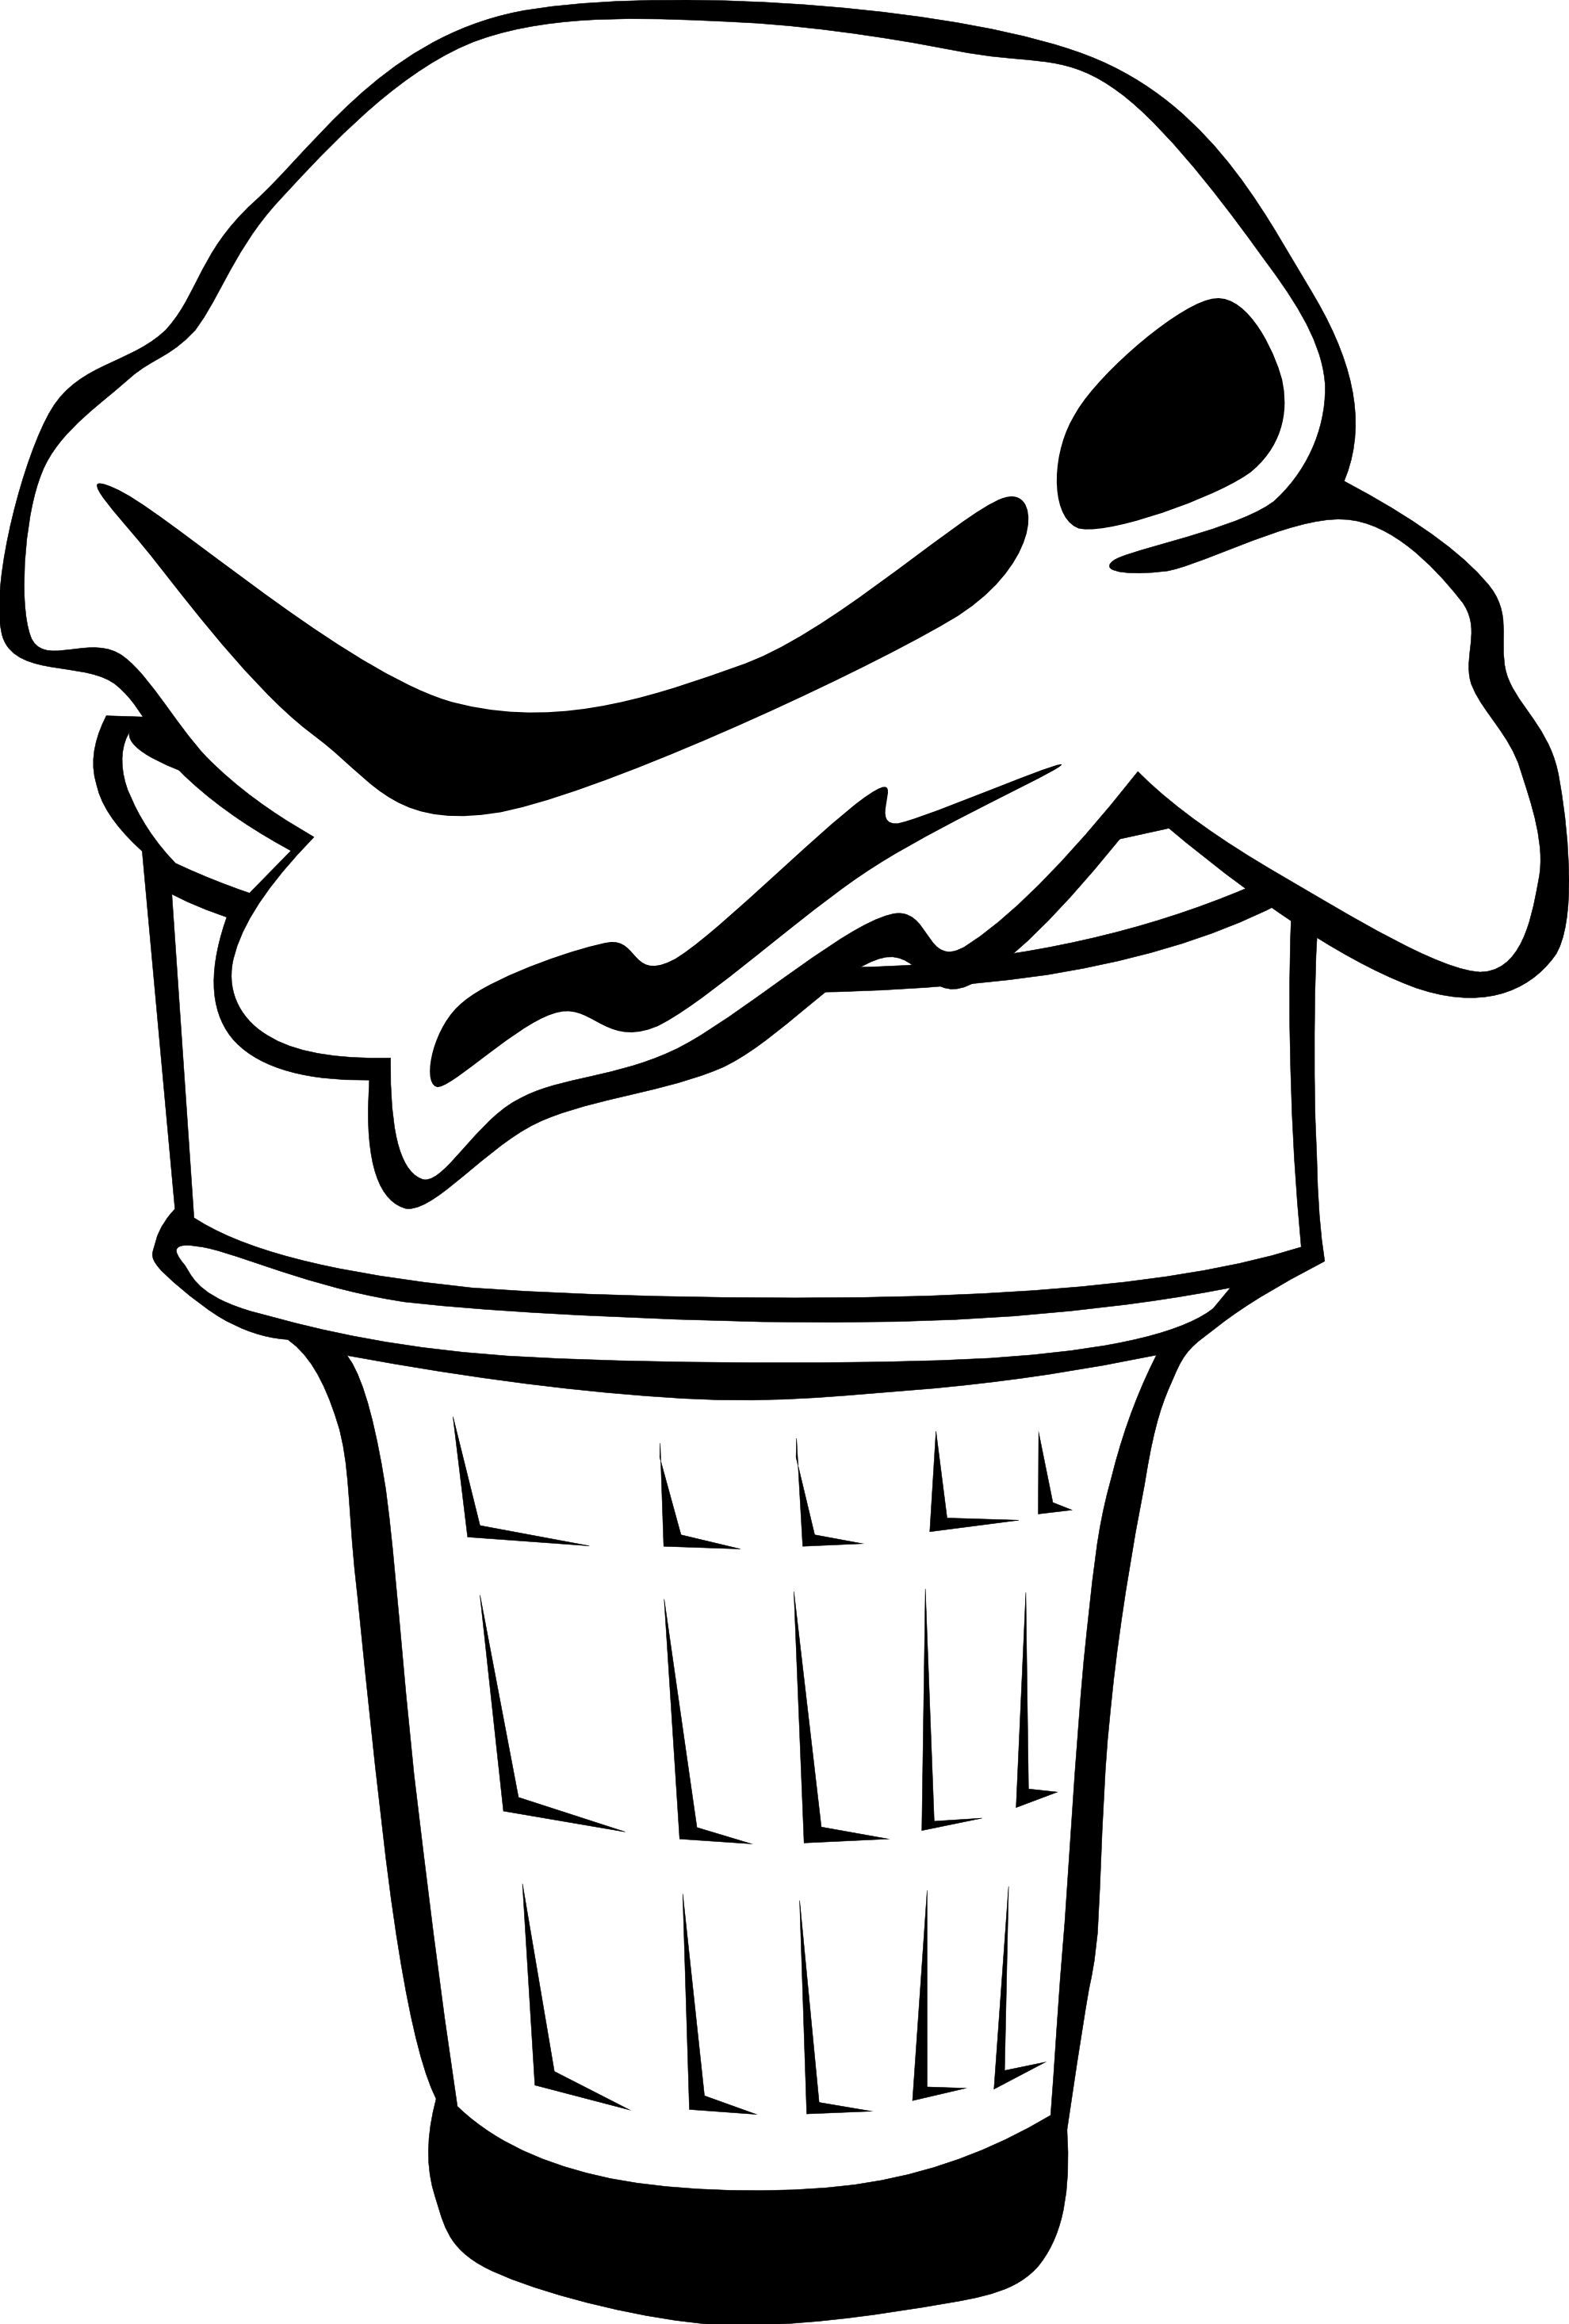 Ice Cream Clip Art Black And White | Clipart Panda - Free Clipart ...